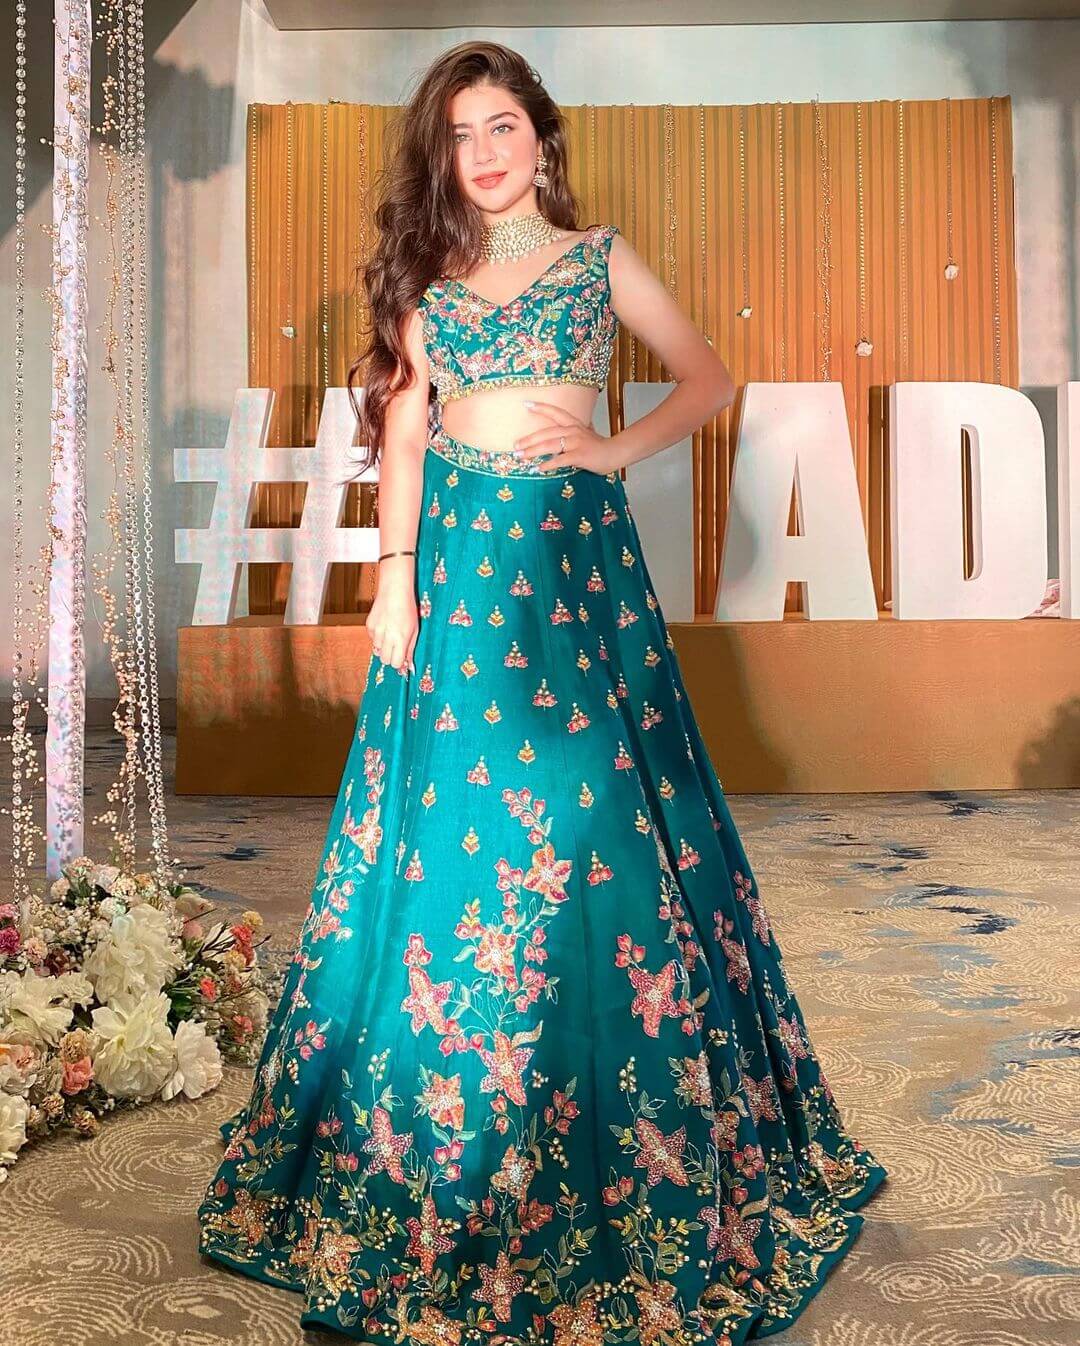 Aditi Bhatia Look Dazzling In Blue Lehenga Outfit Aditi Bhatia Gorgeous Outfit Look